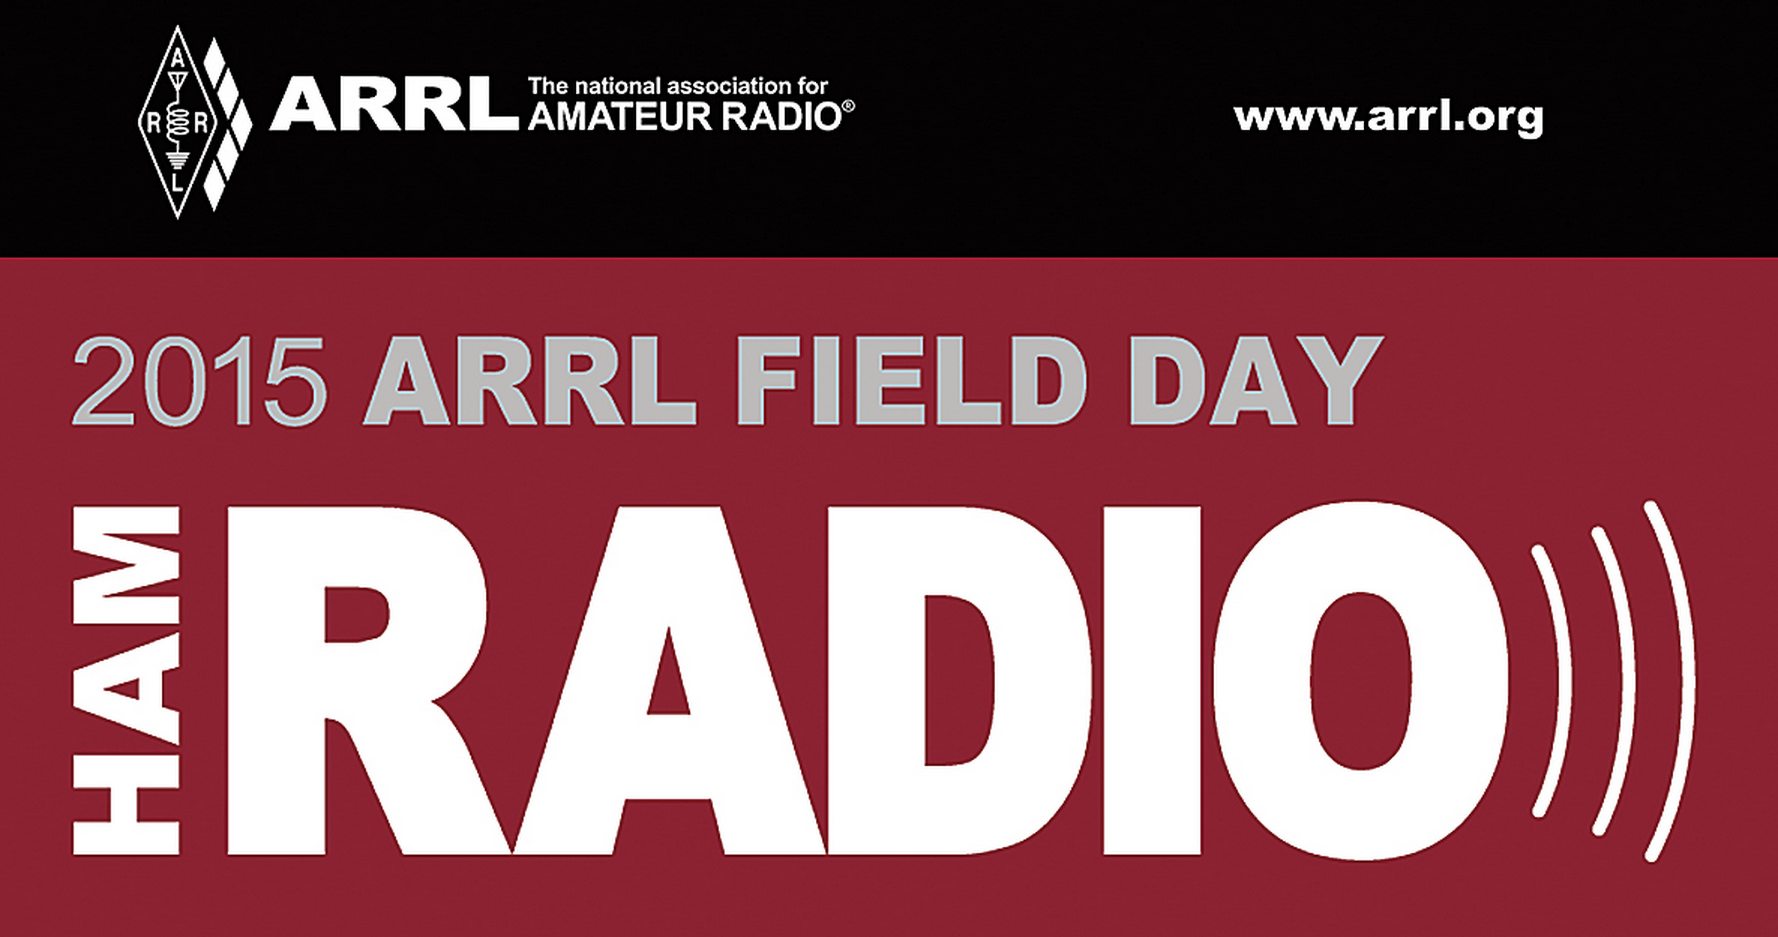 ARRL Logo - ARRL FIELD DAY JUNE 27-28 AT HAINS POINT | HacDC